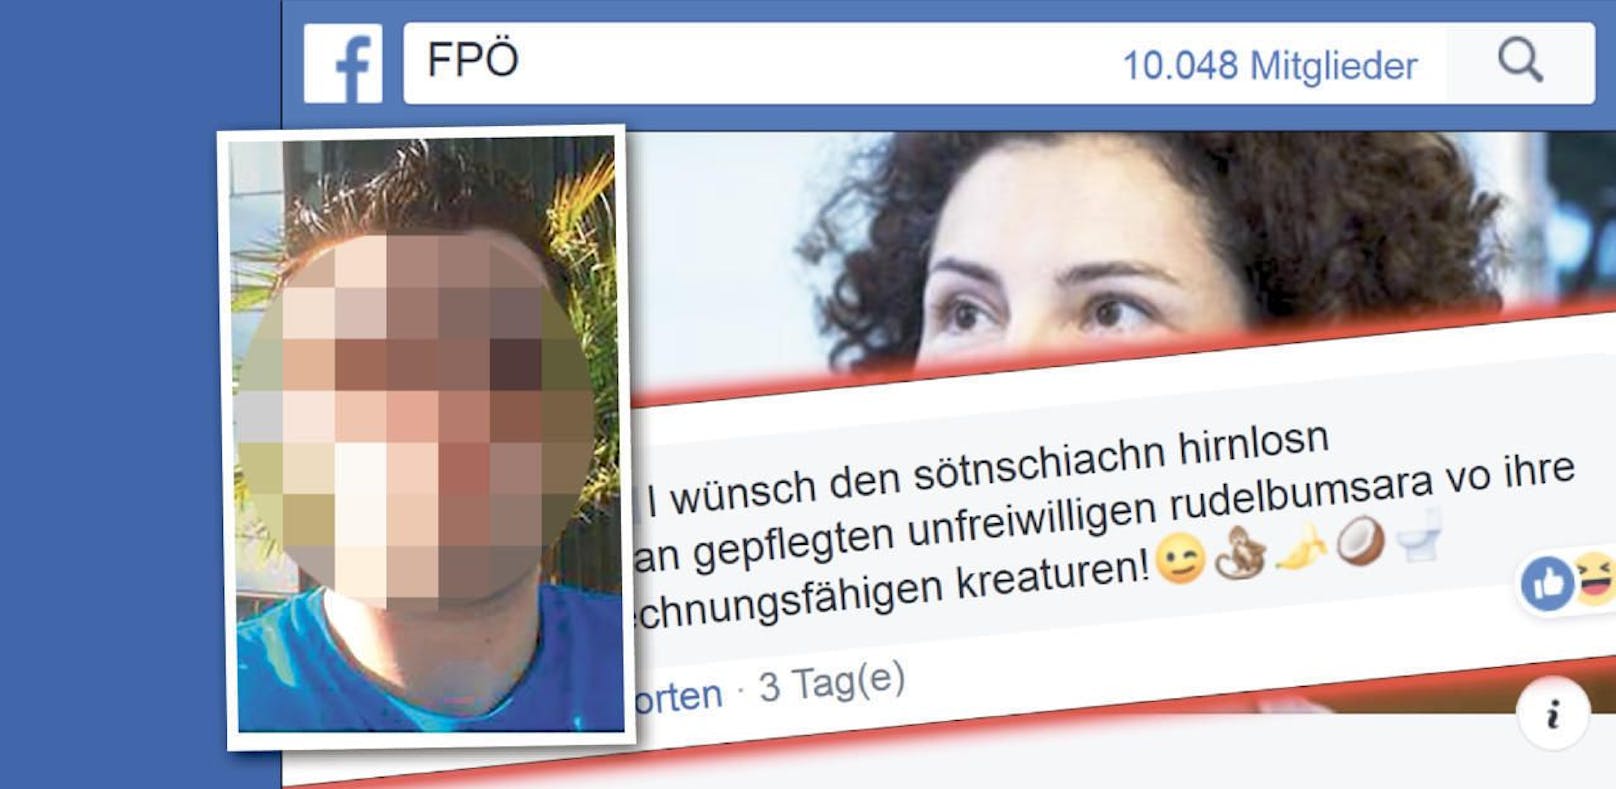 FPÖ-Funktionär wünschte Grüner "Vergewaltigung"